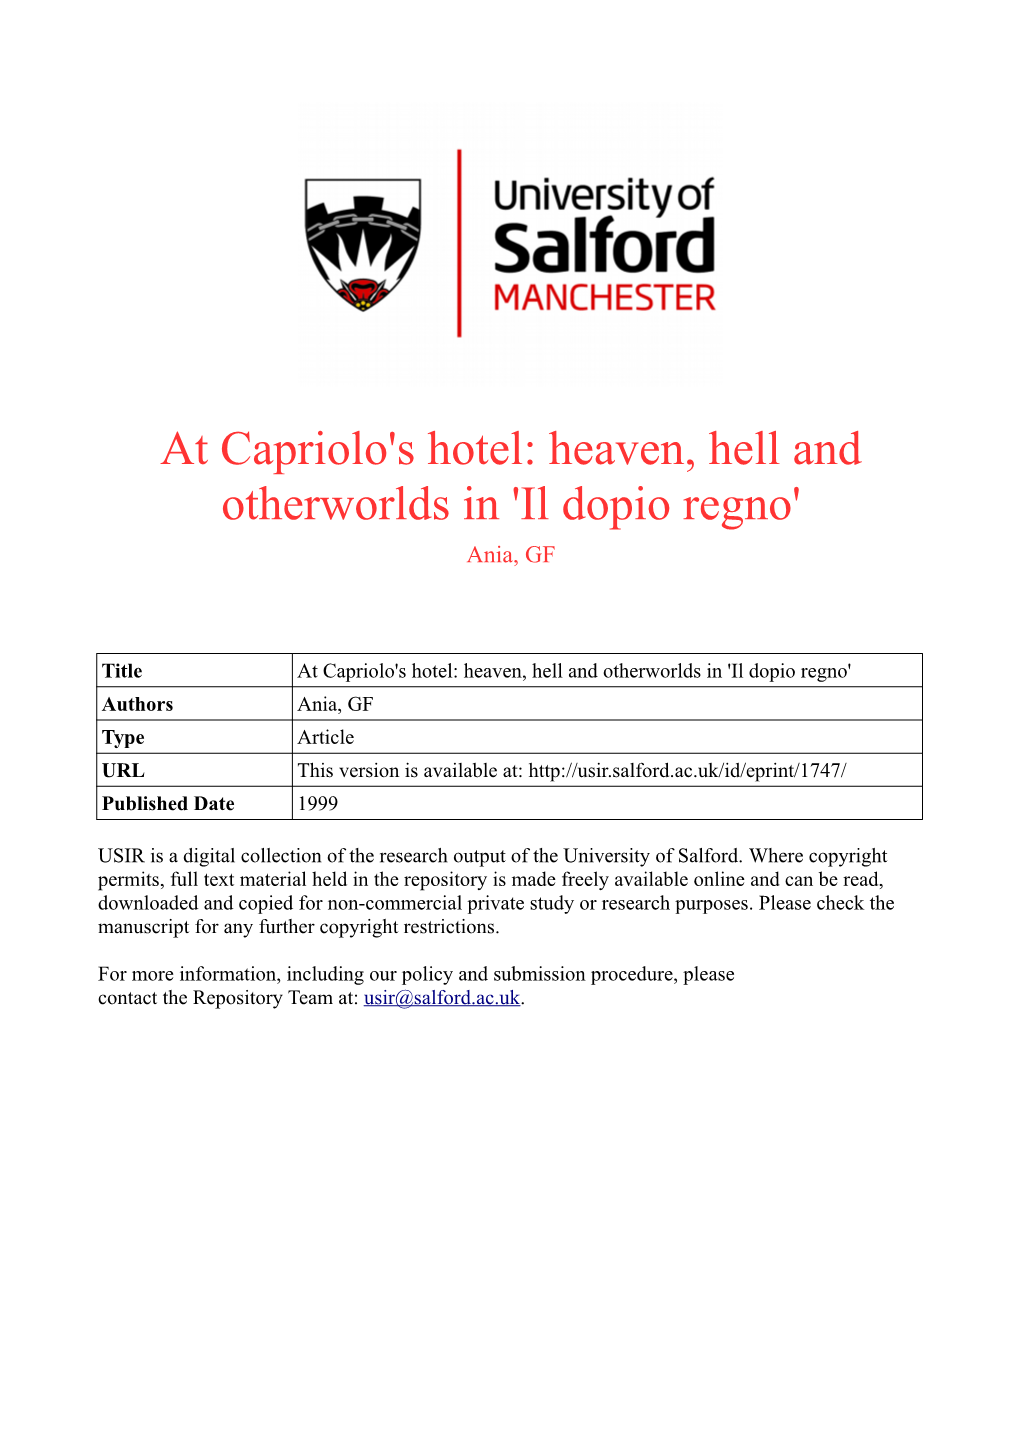 At Capriolo's Hotel: Heaven, Hell and Otherworlds in 'Il Dopio Regno' Ania, GF